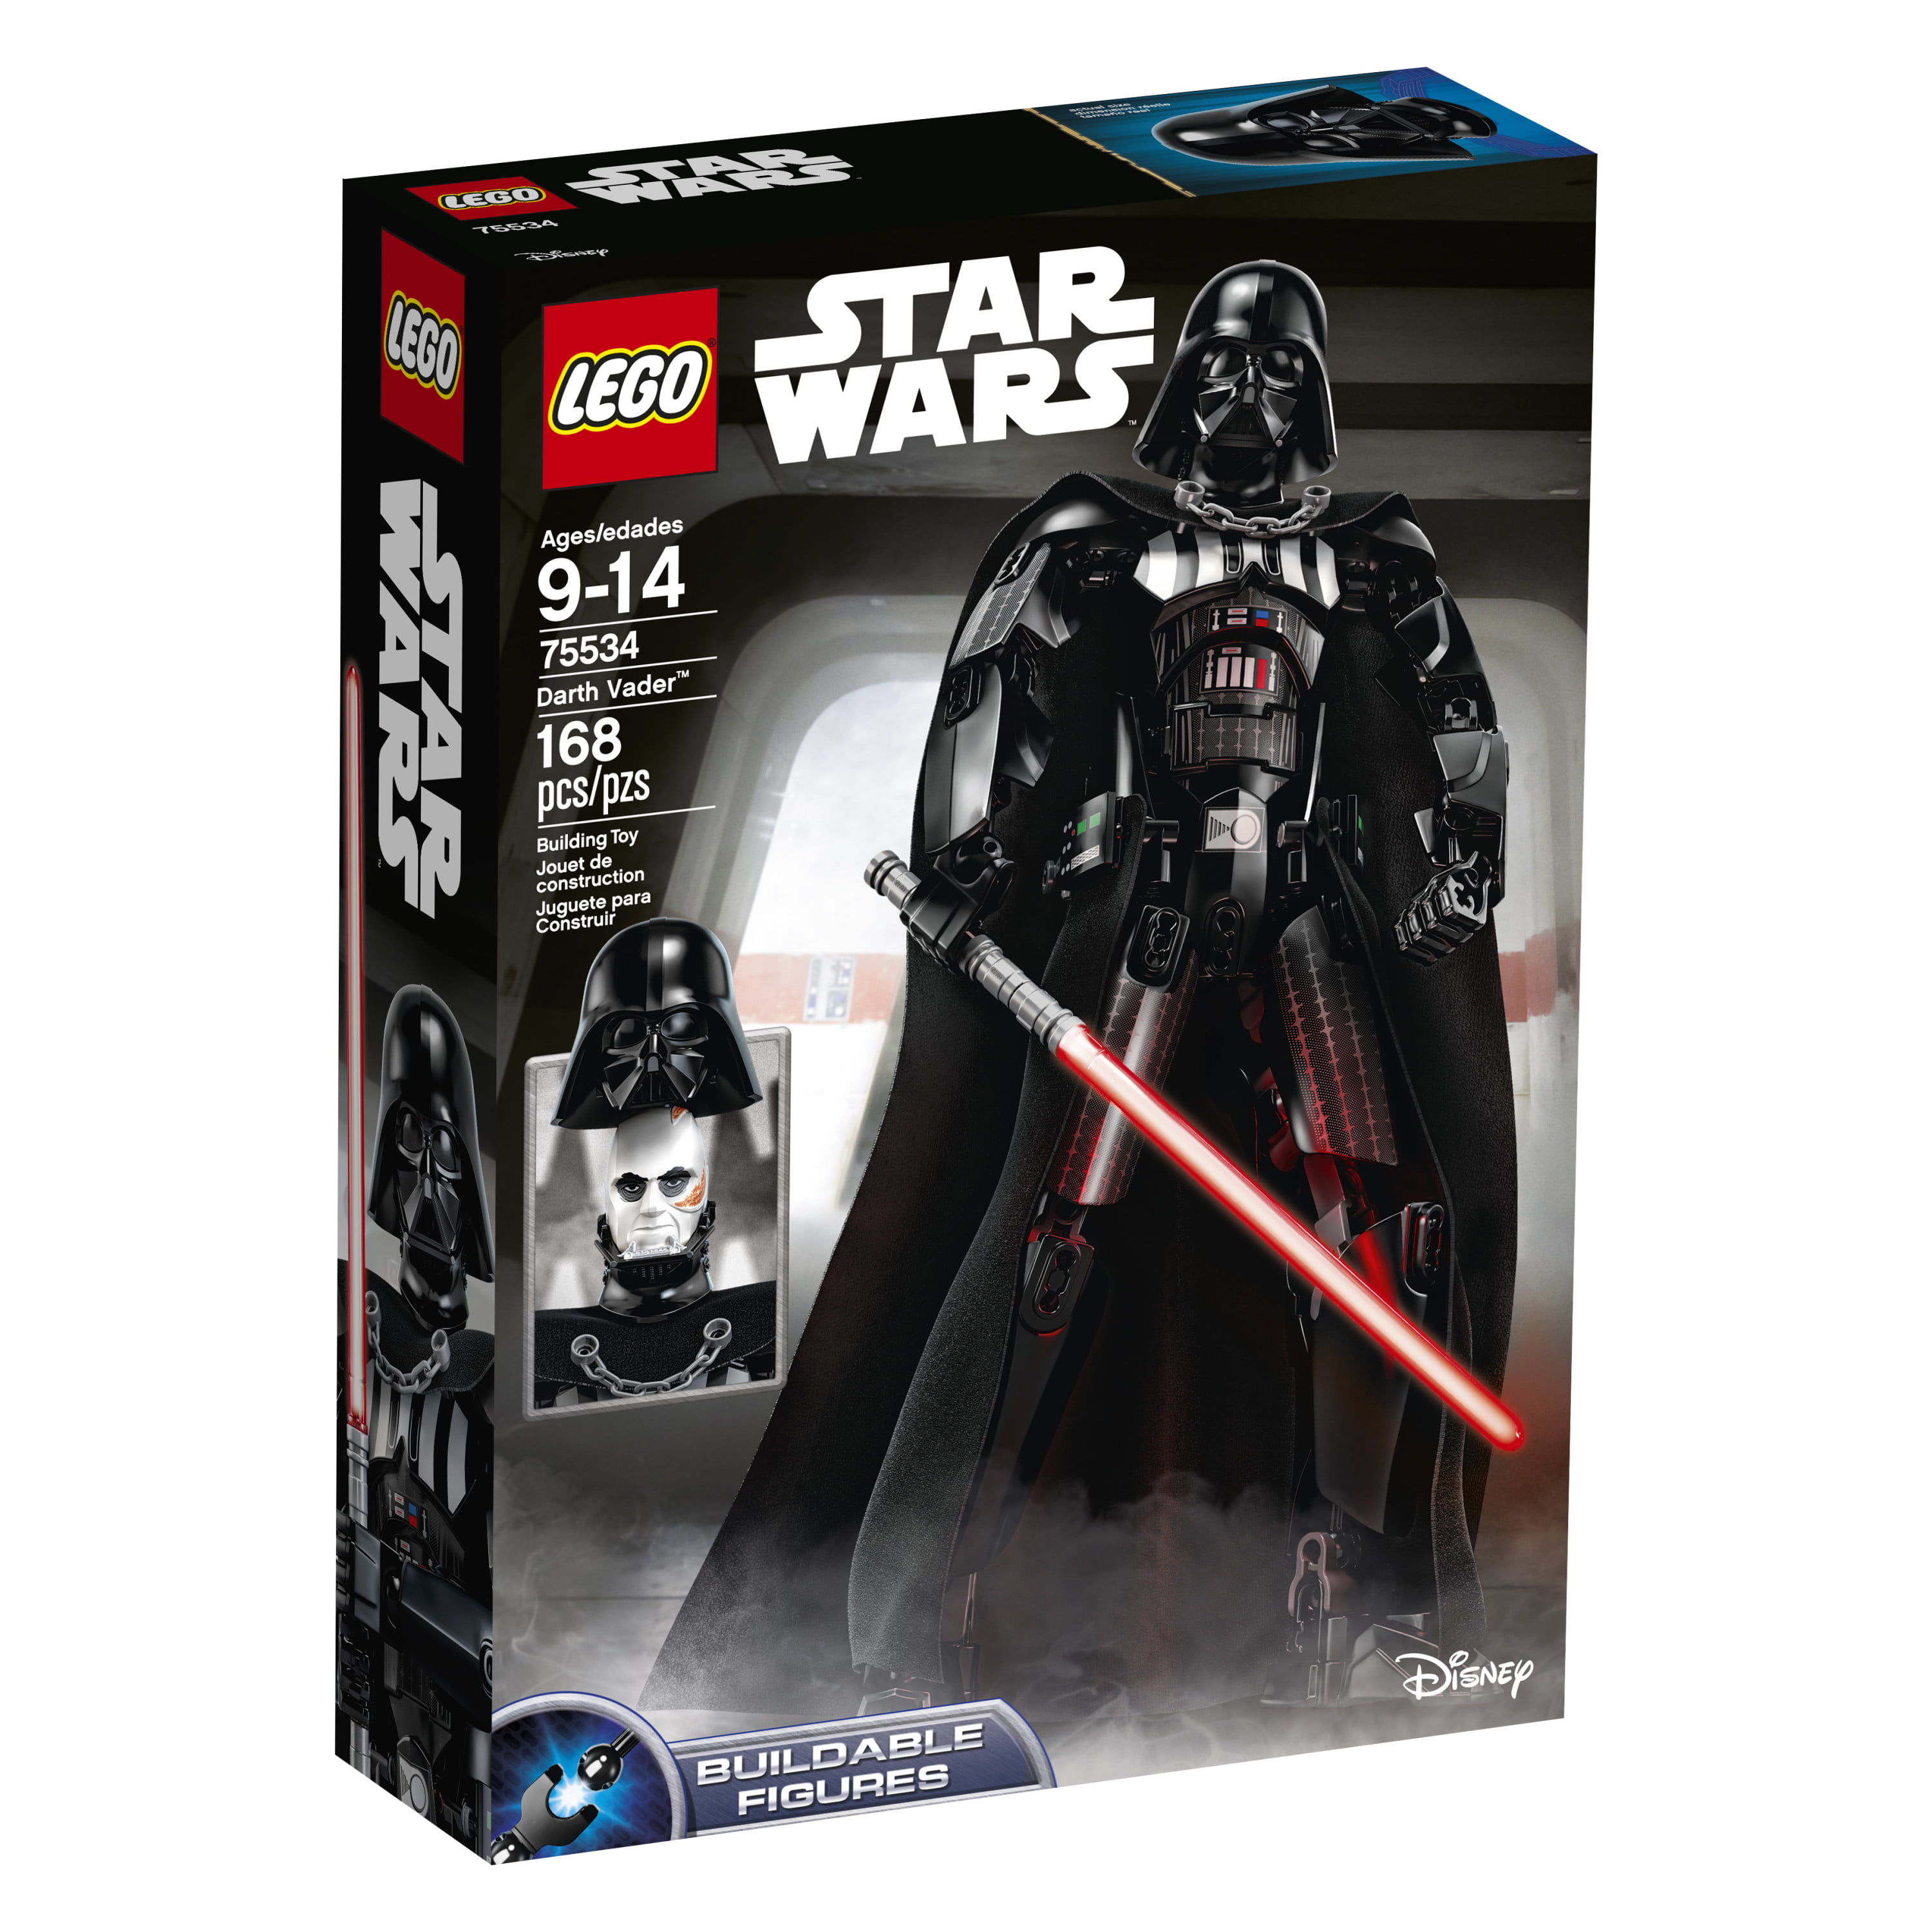 LEGO Wars Darth Vader 75534 - Walmart.com